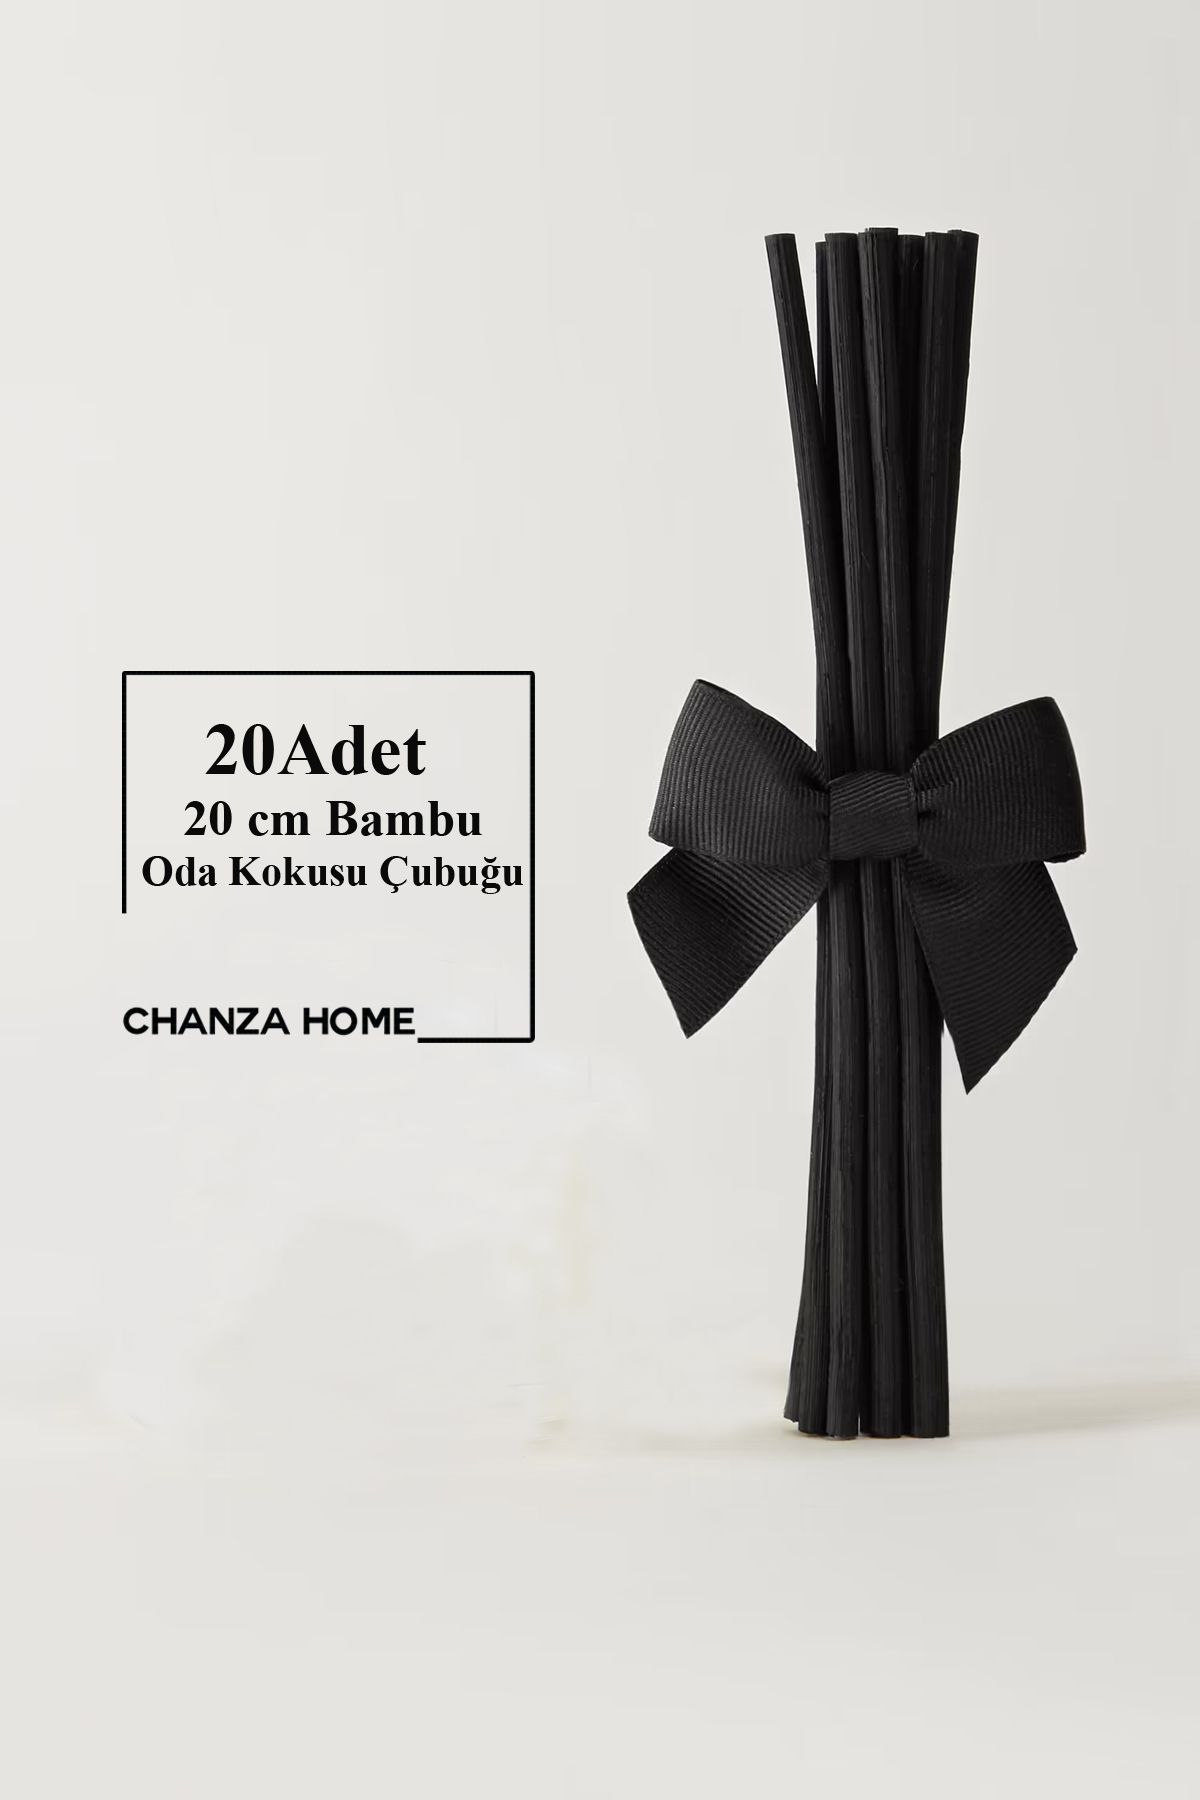 CHANZA HOME Siyah Oda Kokusu Çubuğu Siyah Fiber Çubuk Doğal Bambu Oda Kokusu Çubuğu 20 Adet - 20 Cm